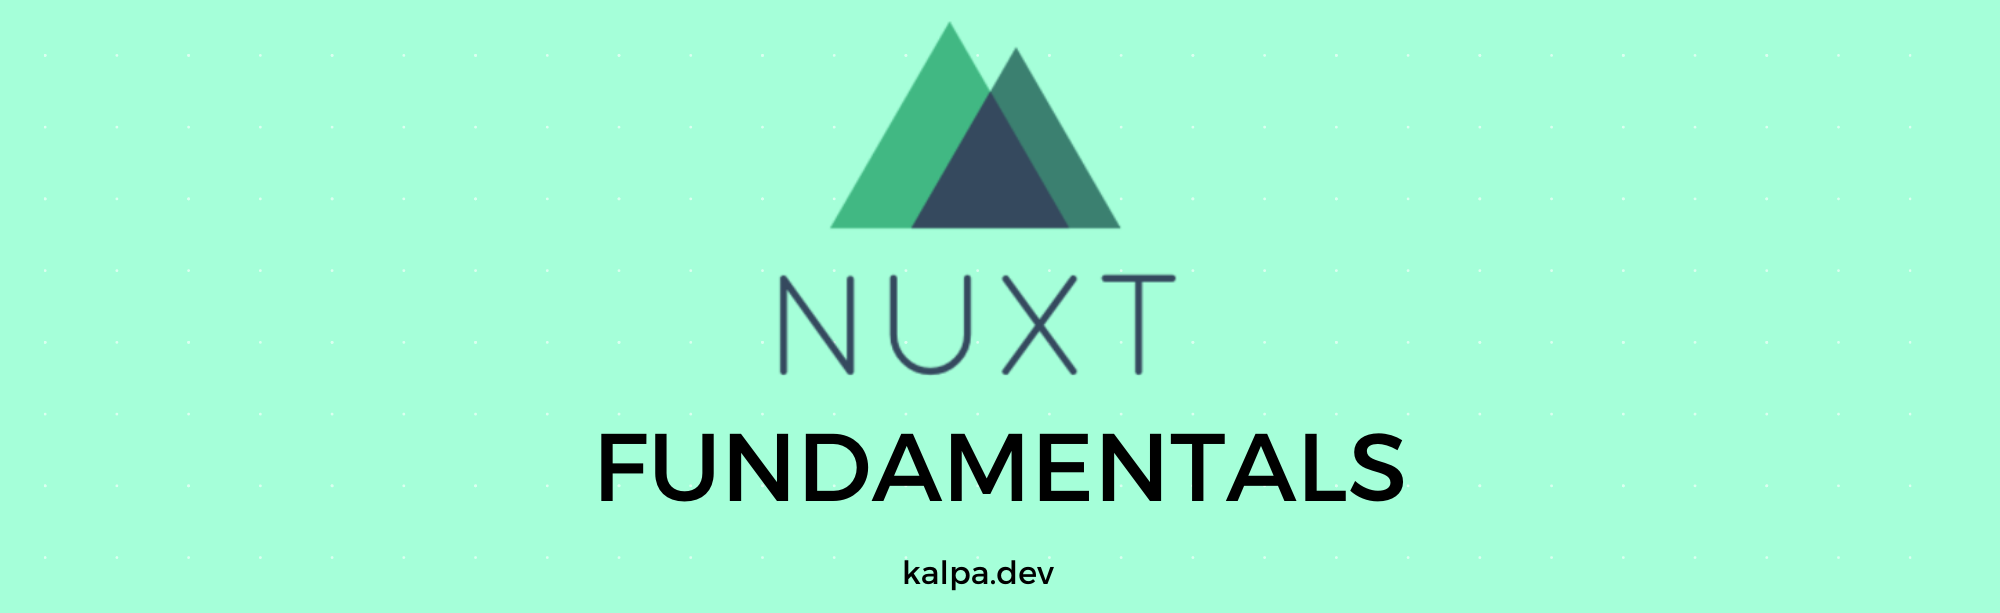 Nuxtjs Fundamentals: Introduction